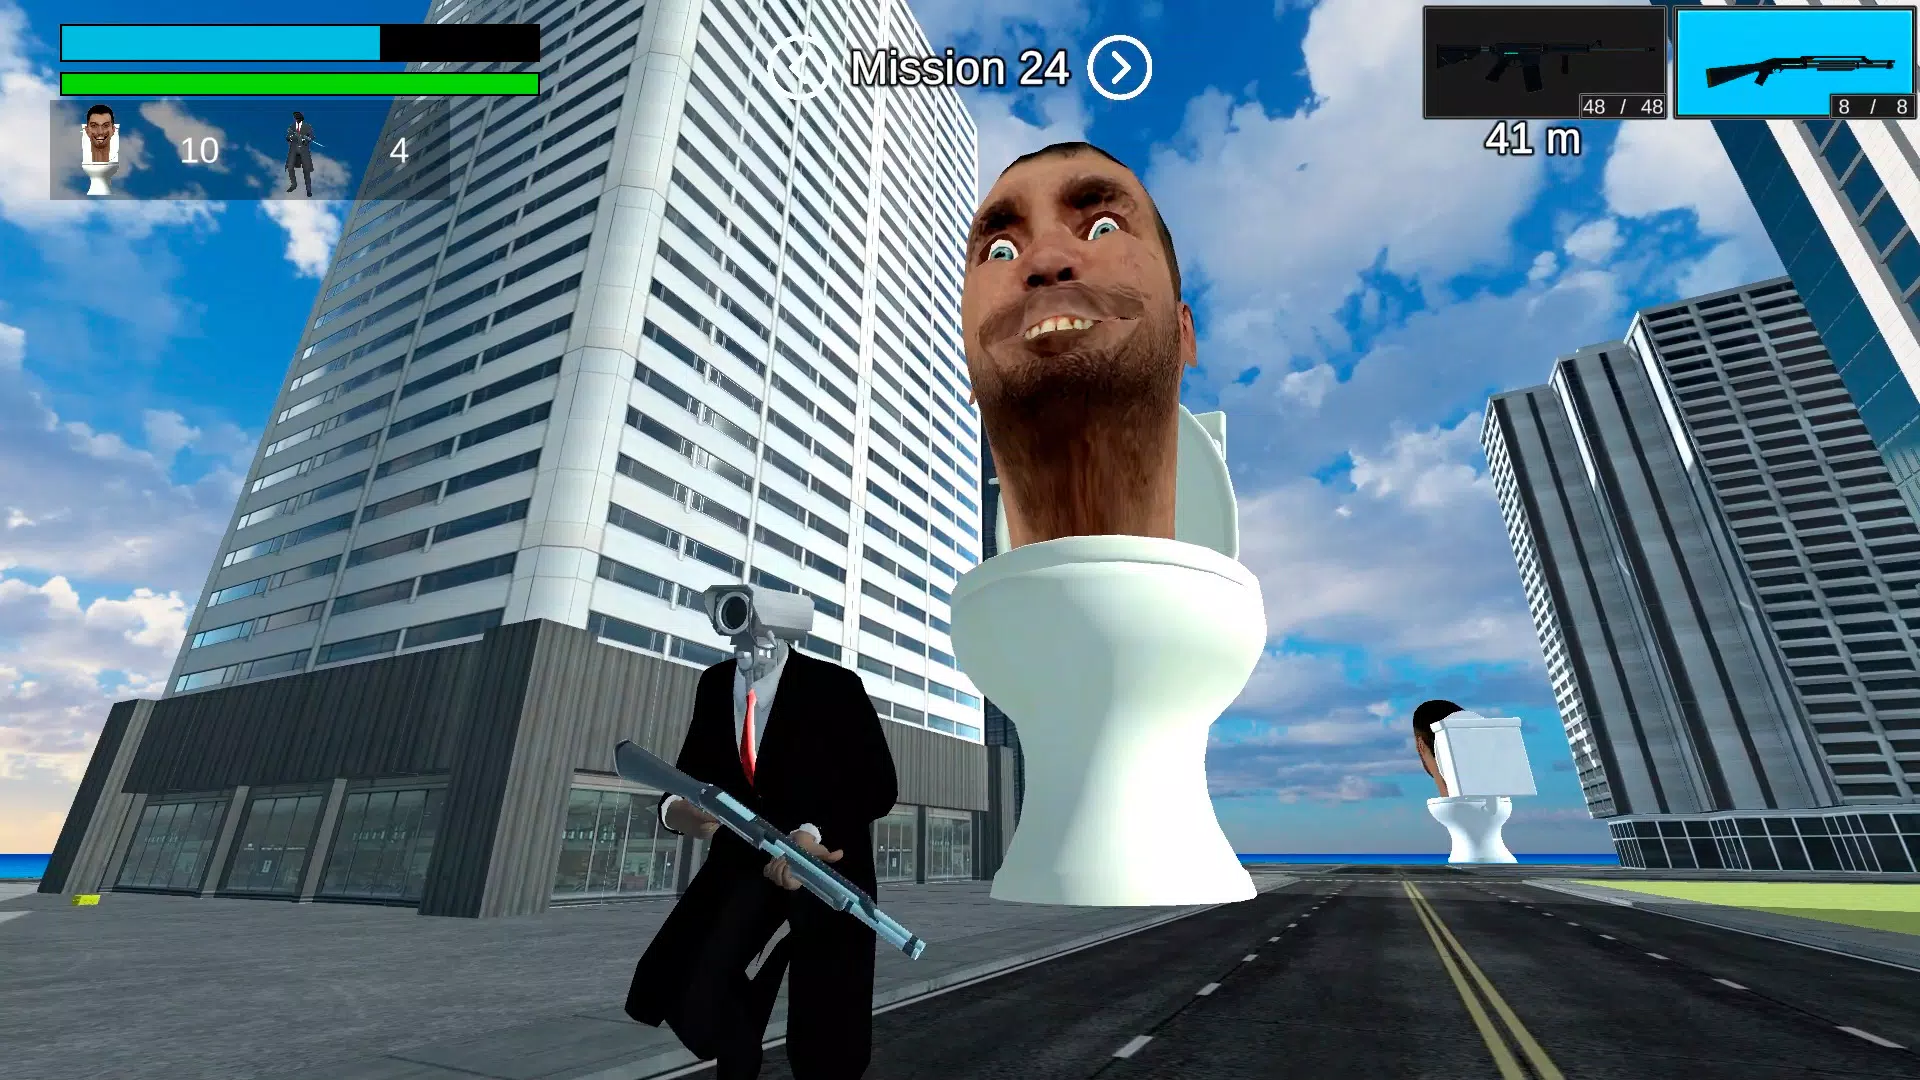 Download Skibidi toilet game online mod APK v11 For Android